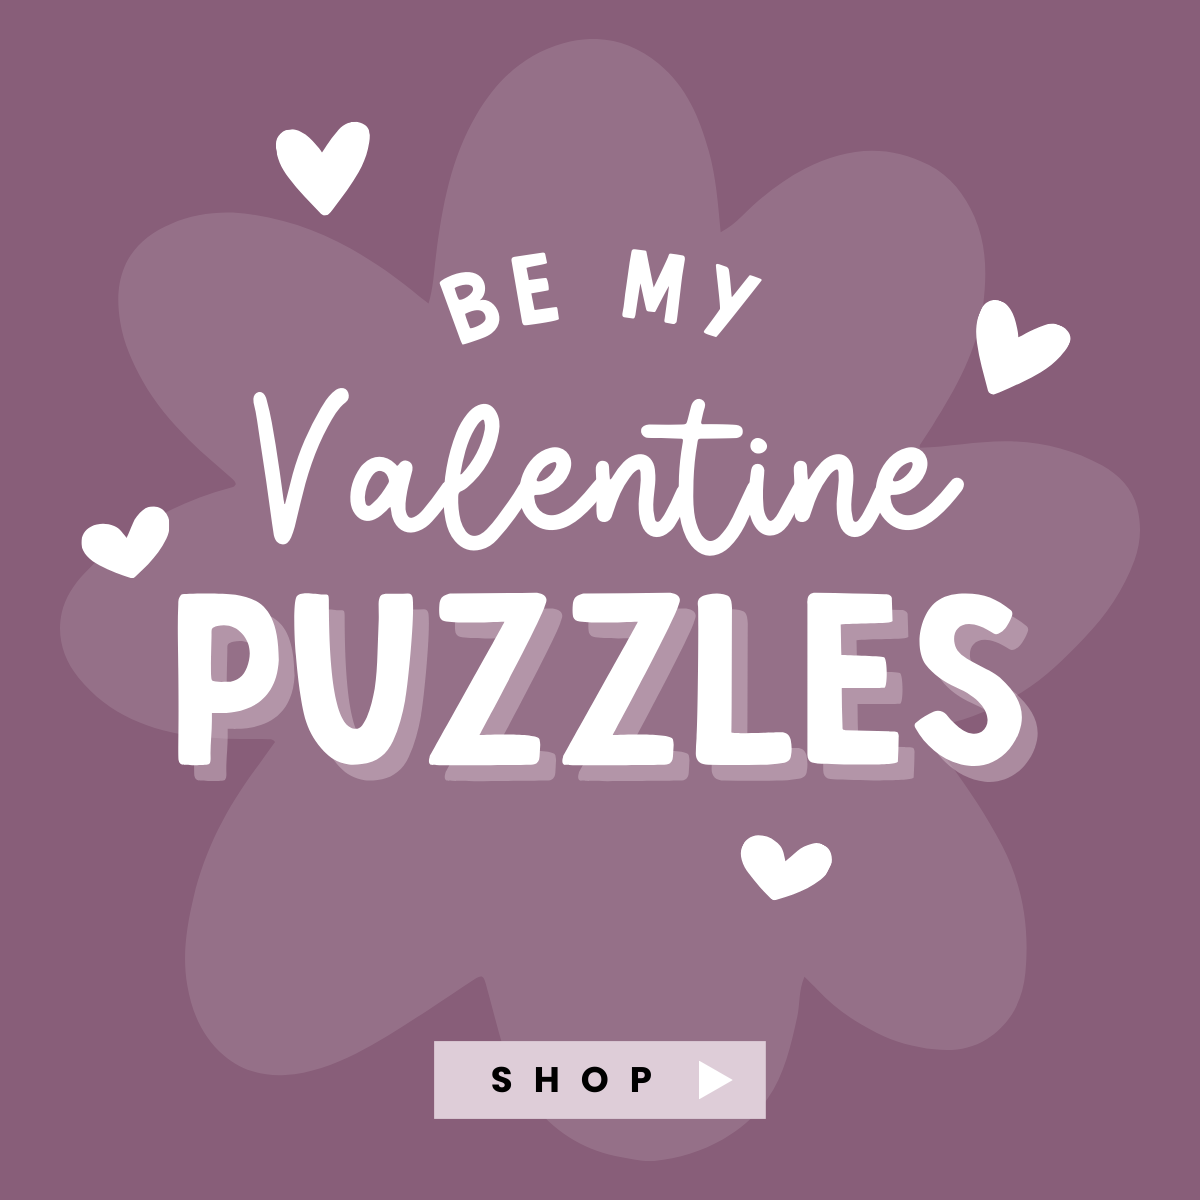 Be My Valentine Puzzles